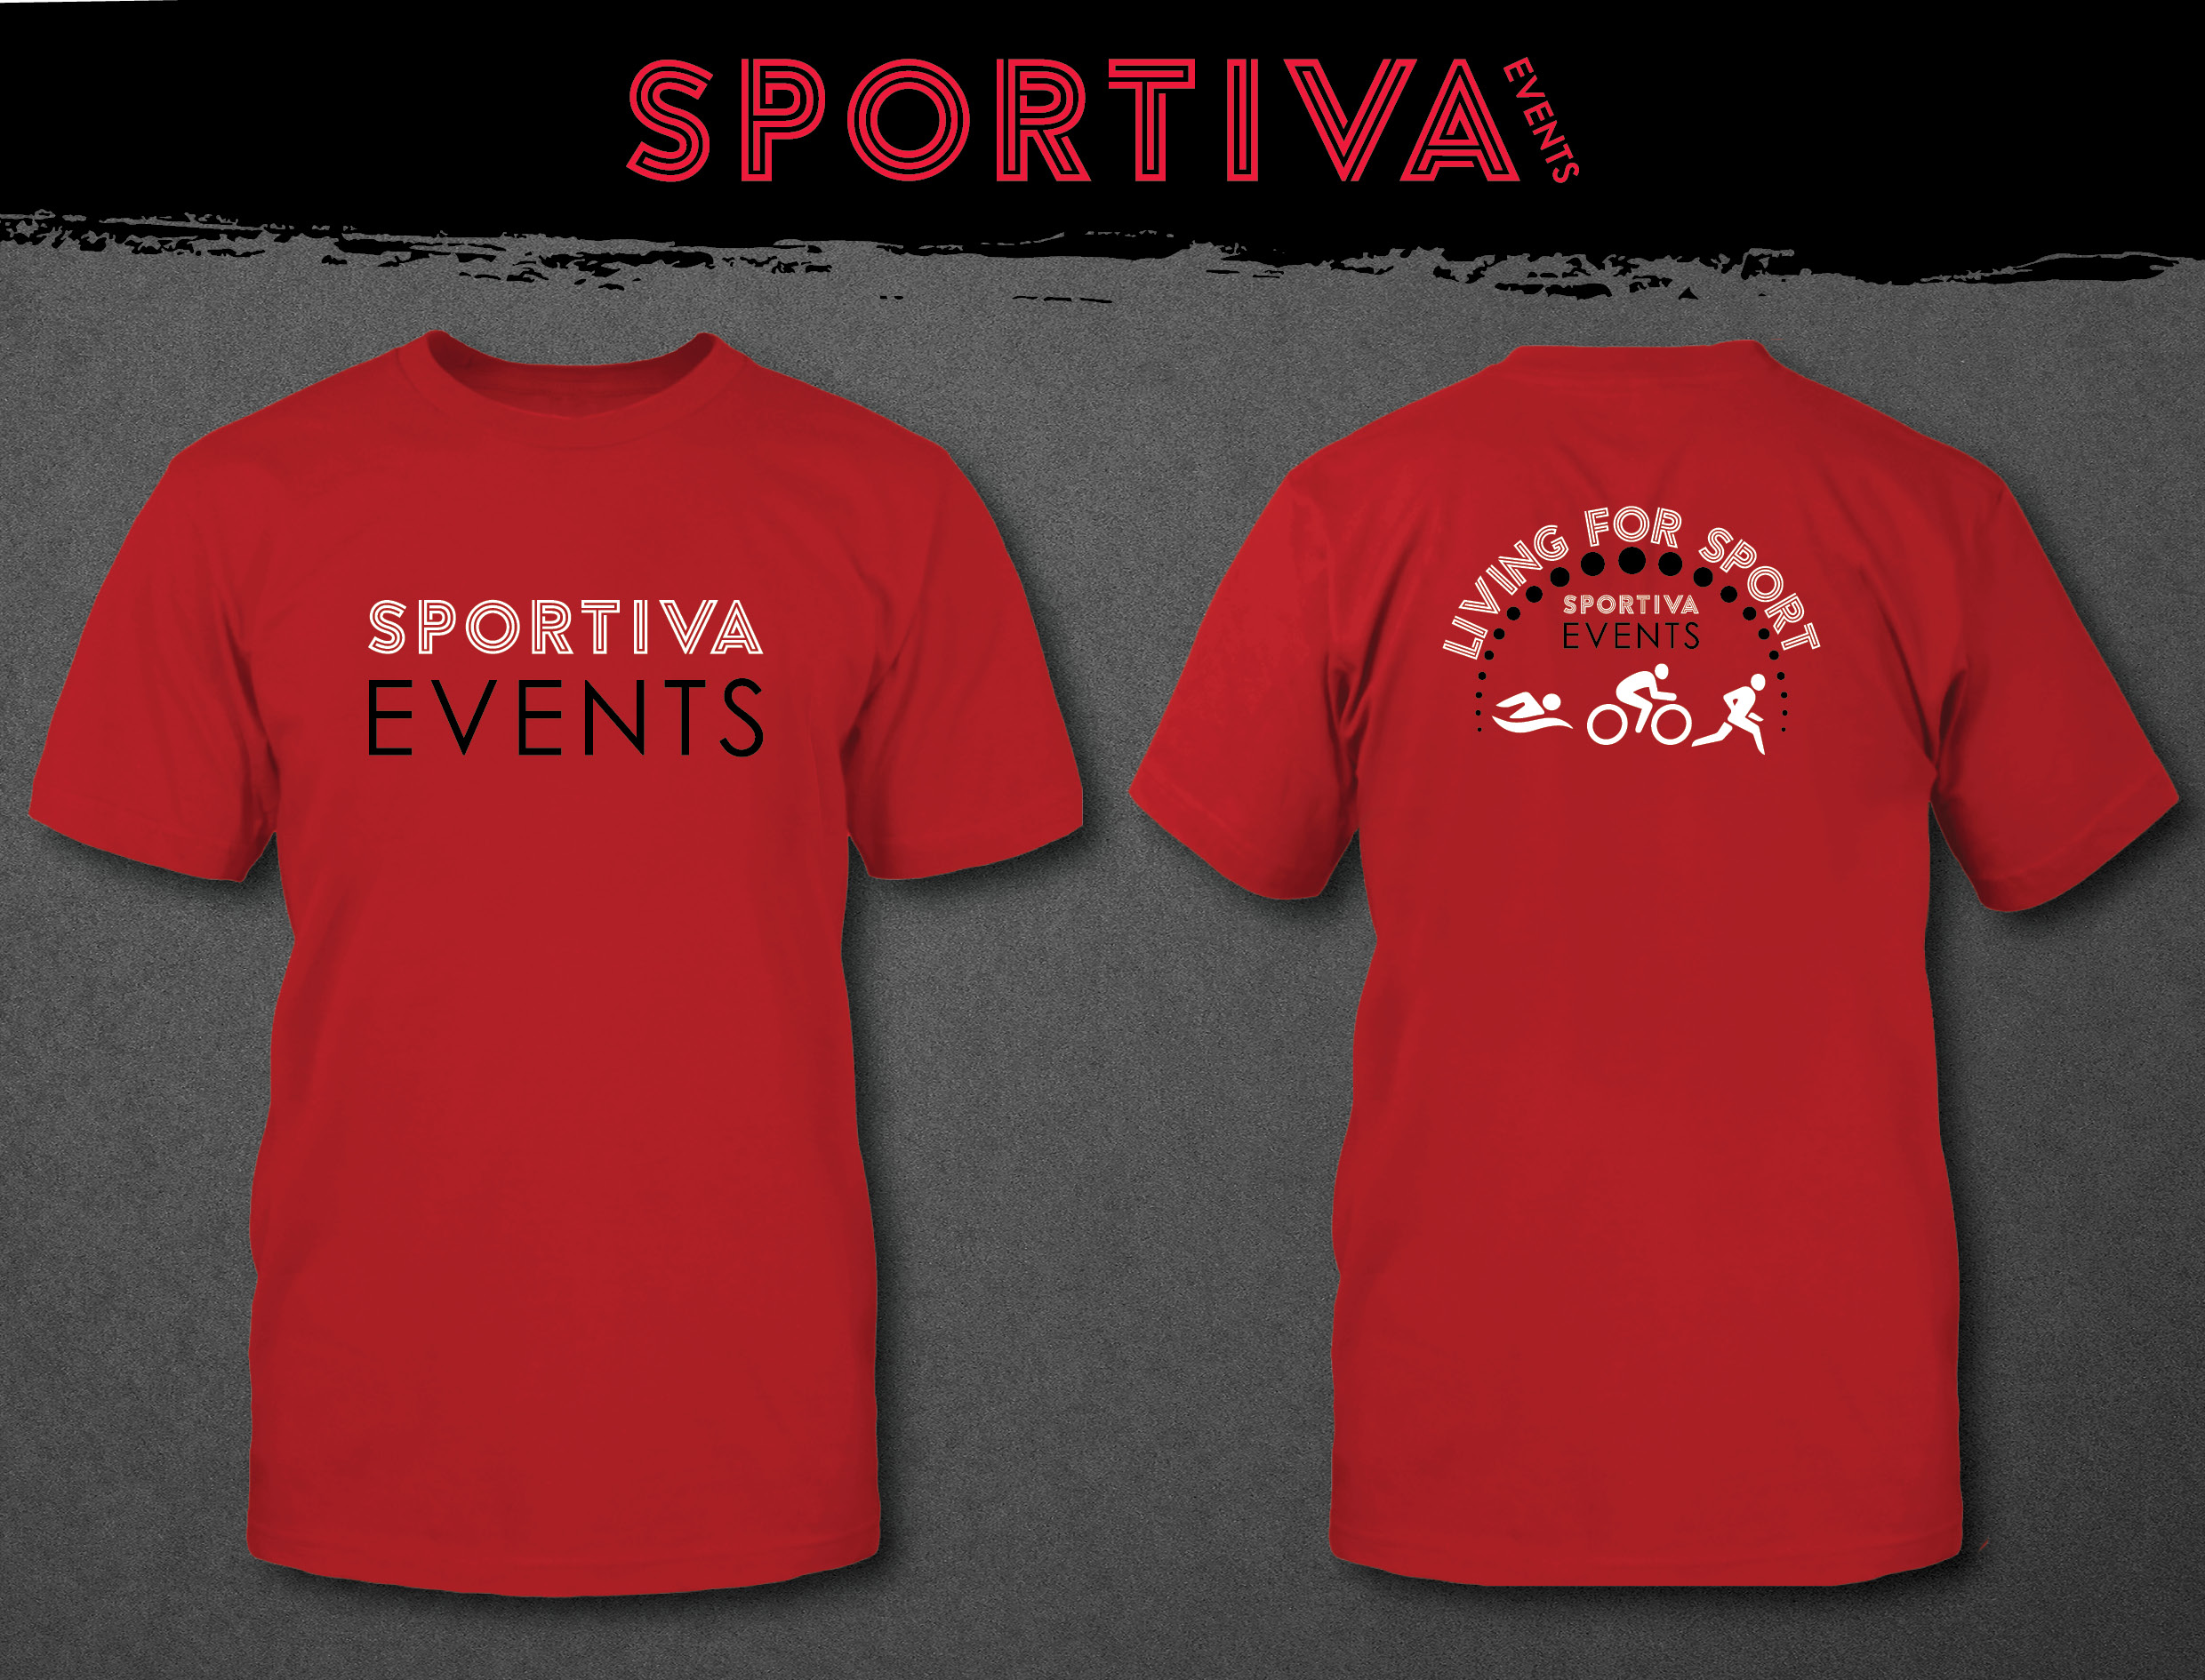 Sportiva Events Cotton t-shirt